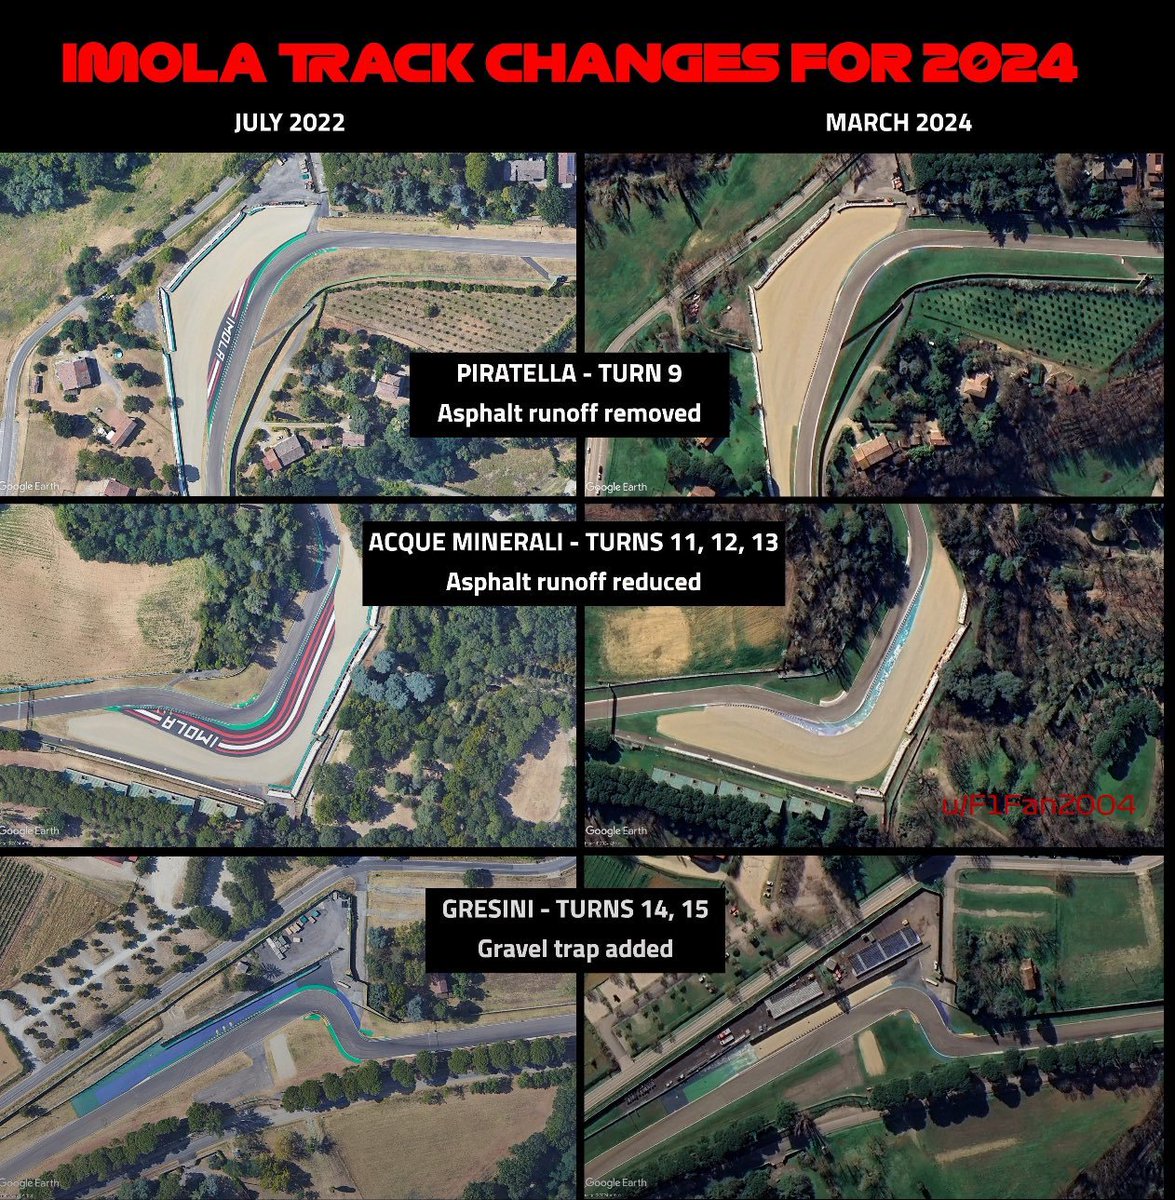 Imola track changes for 2024. 

[u/F1Fan2004]